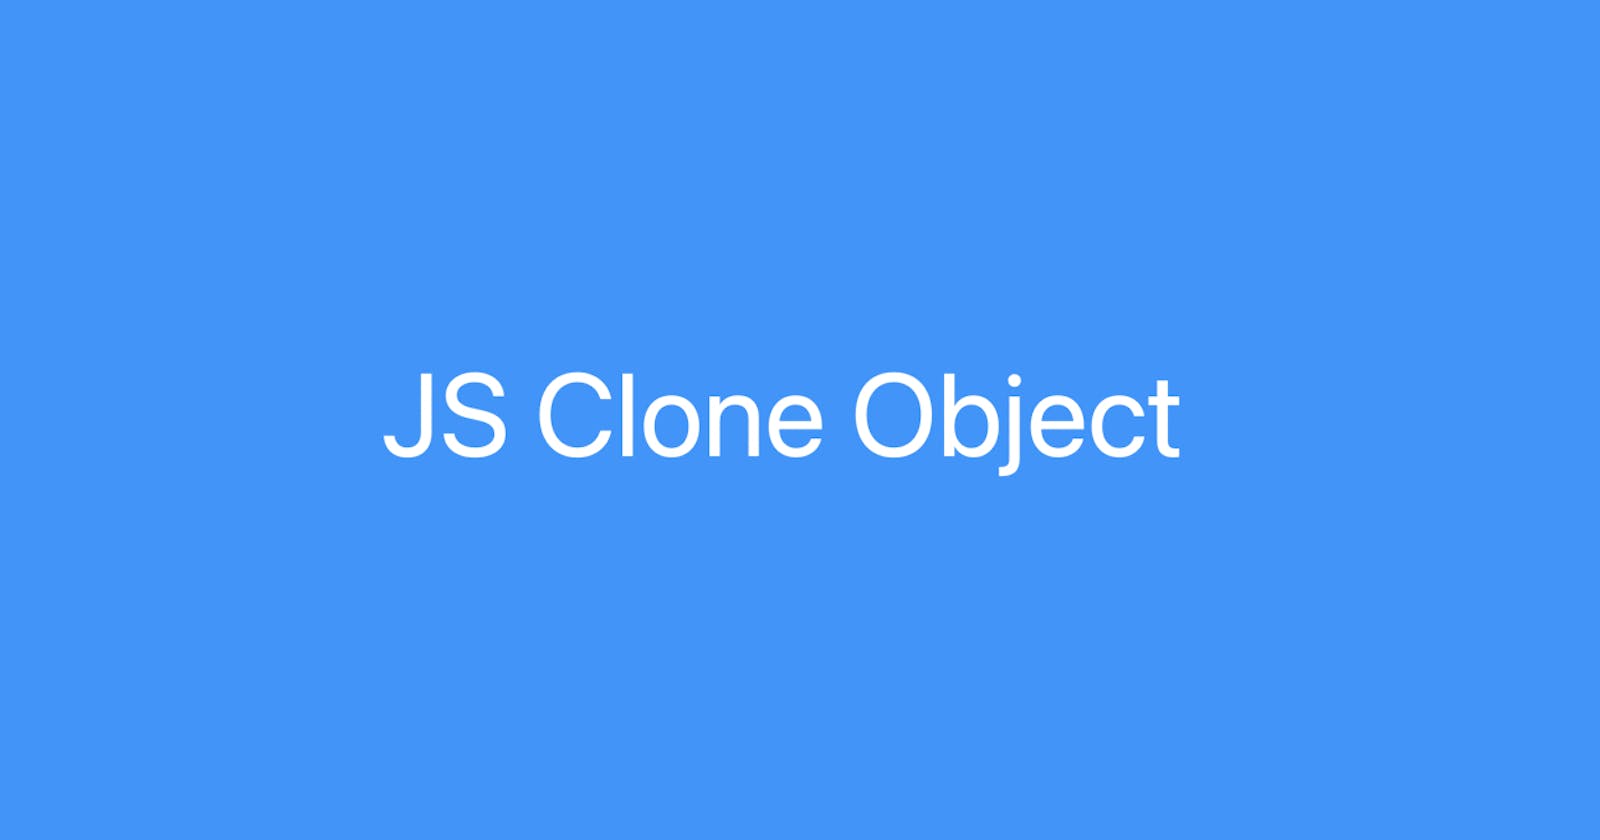 JS Clone Object